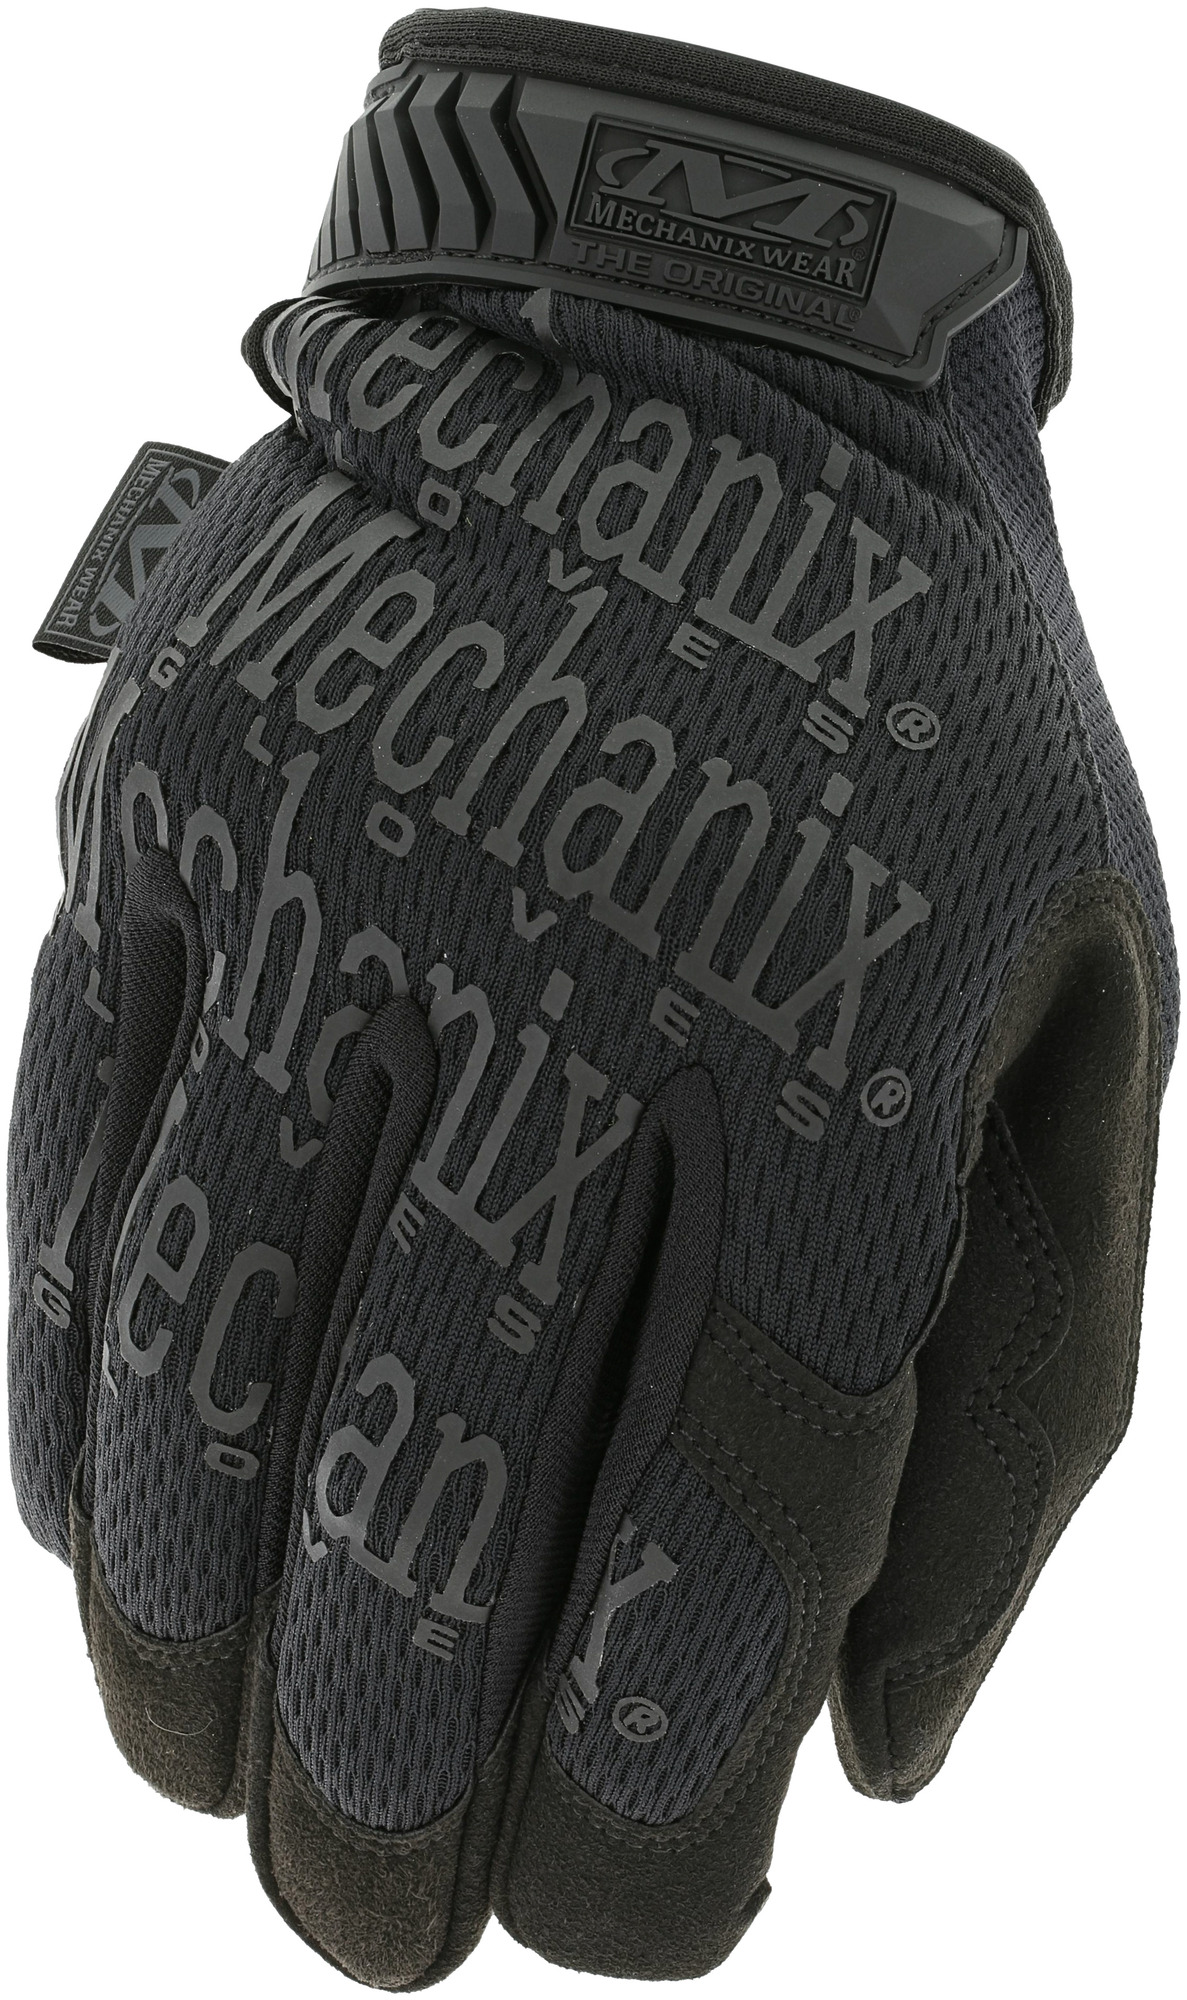 E-shop MECHANIX rukavice so syntetickou kožou Original - Covert - čierne L/10